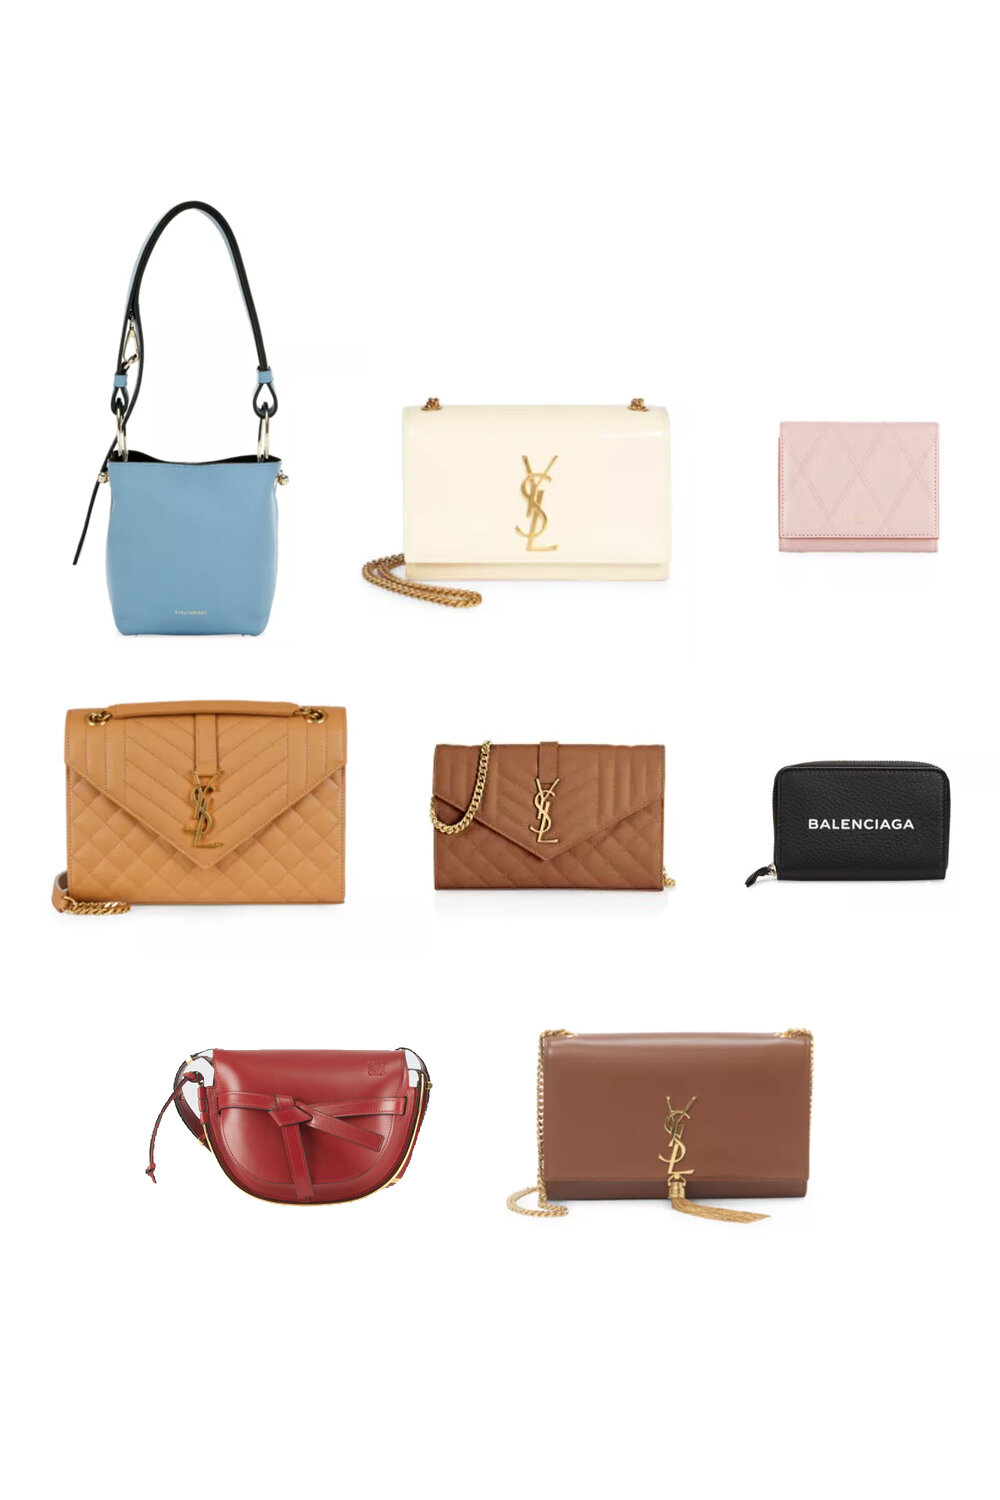 Saks OFF 5TH : Discount Designer Women's Clothing, Handbags & More